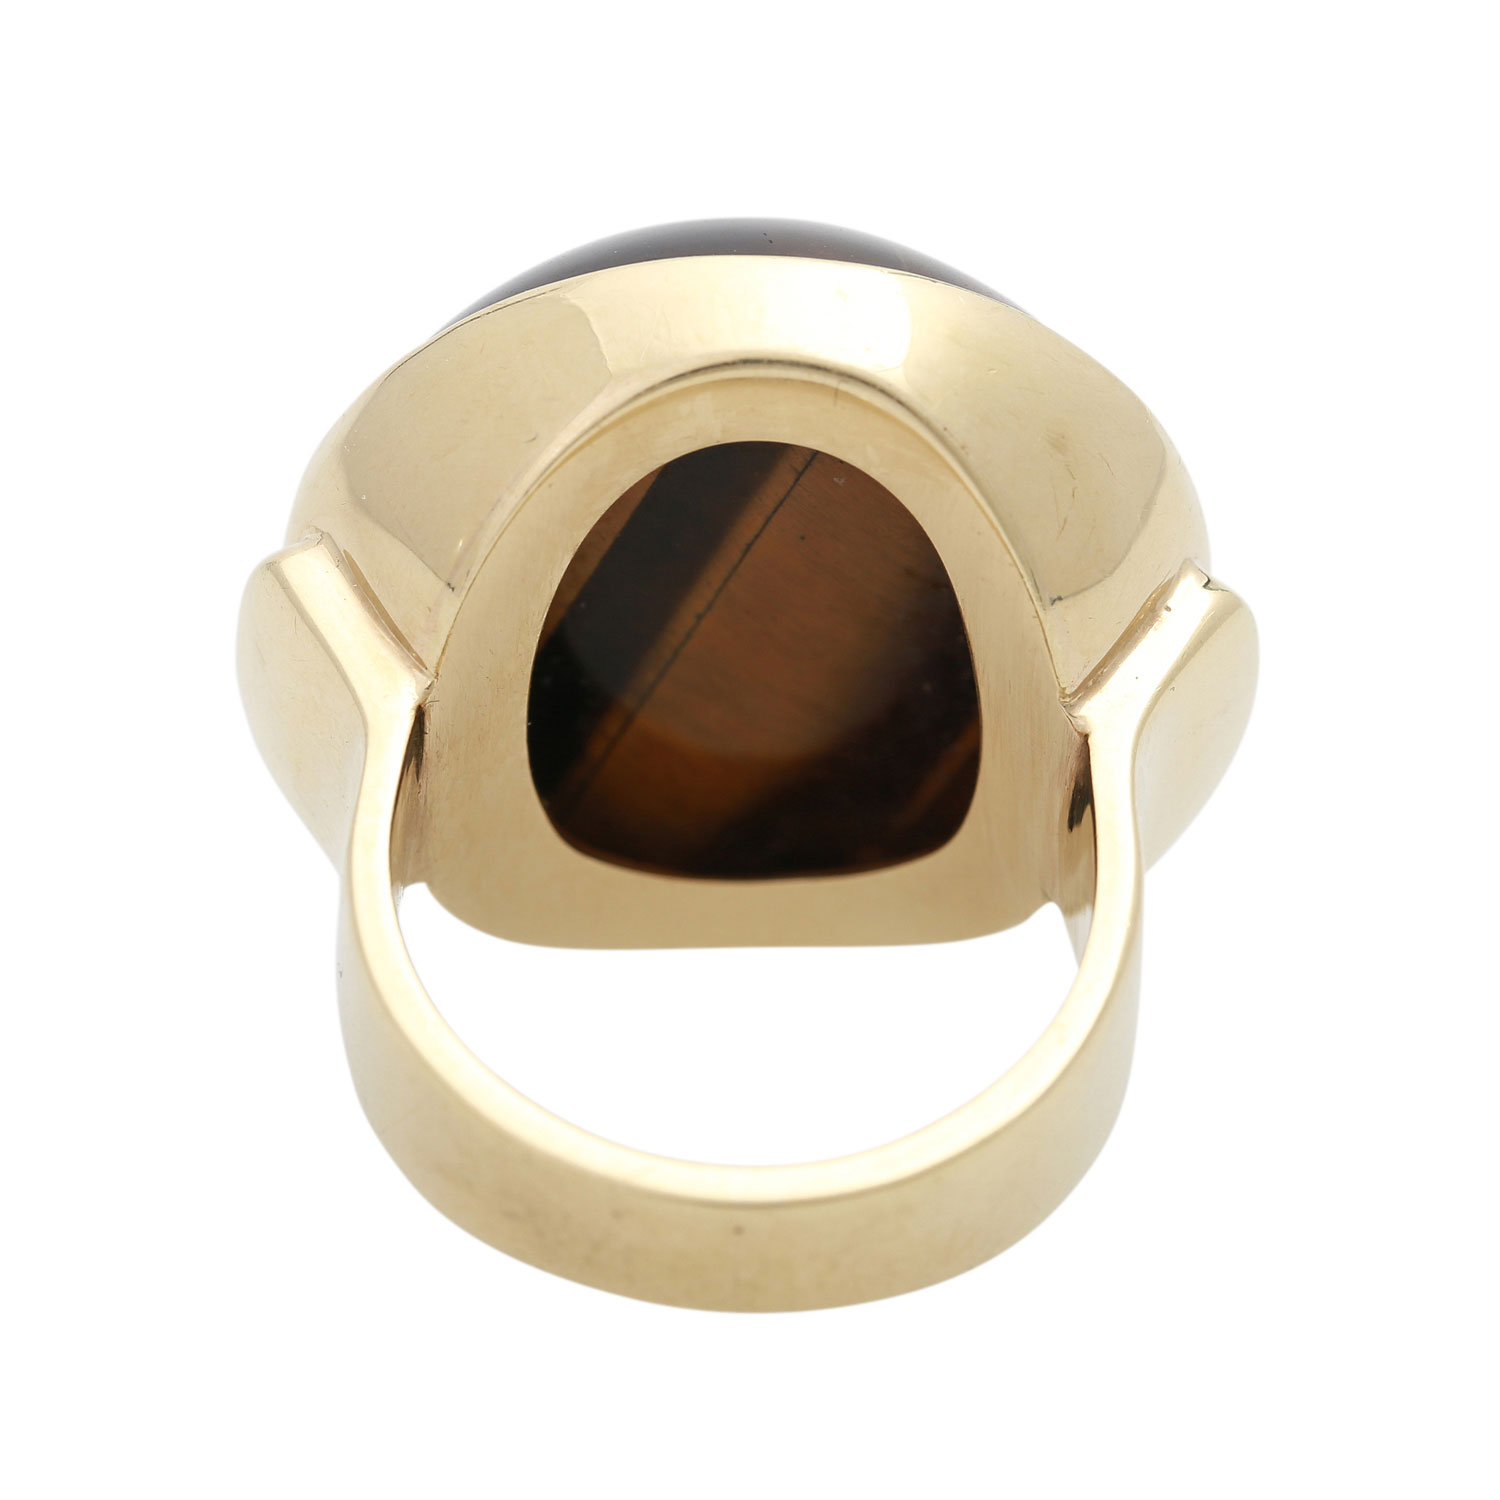 Ring mit großem Tigerauge-Cabochon,D: ca. 22 mm, GG 14K, 17,9 gr, RW 54, HANDARBEIT, - Image 4 of 4